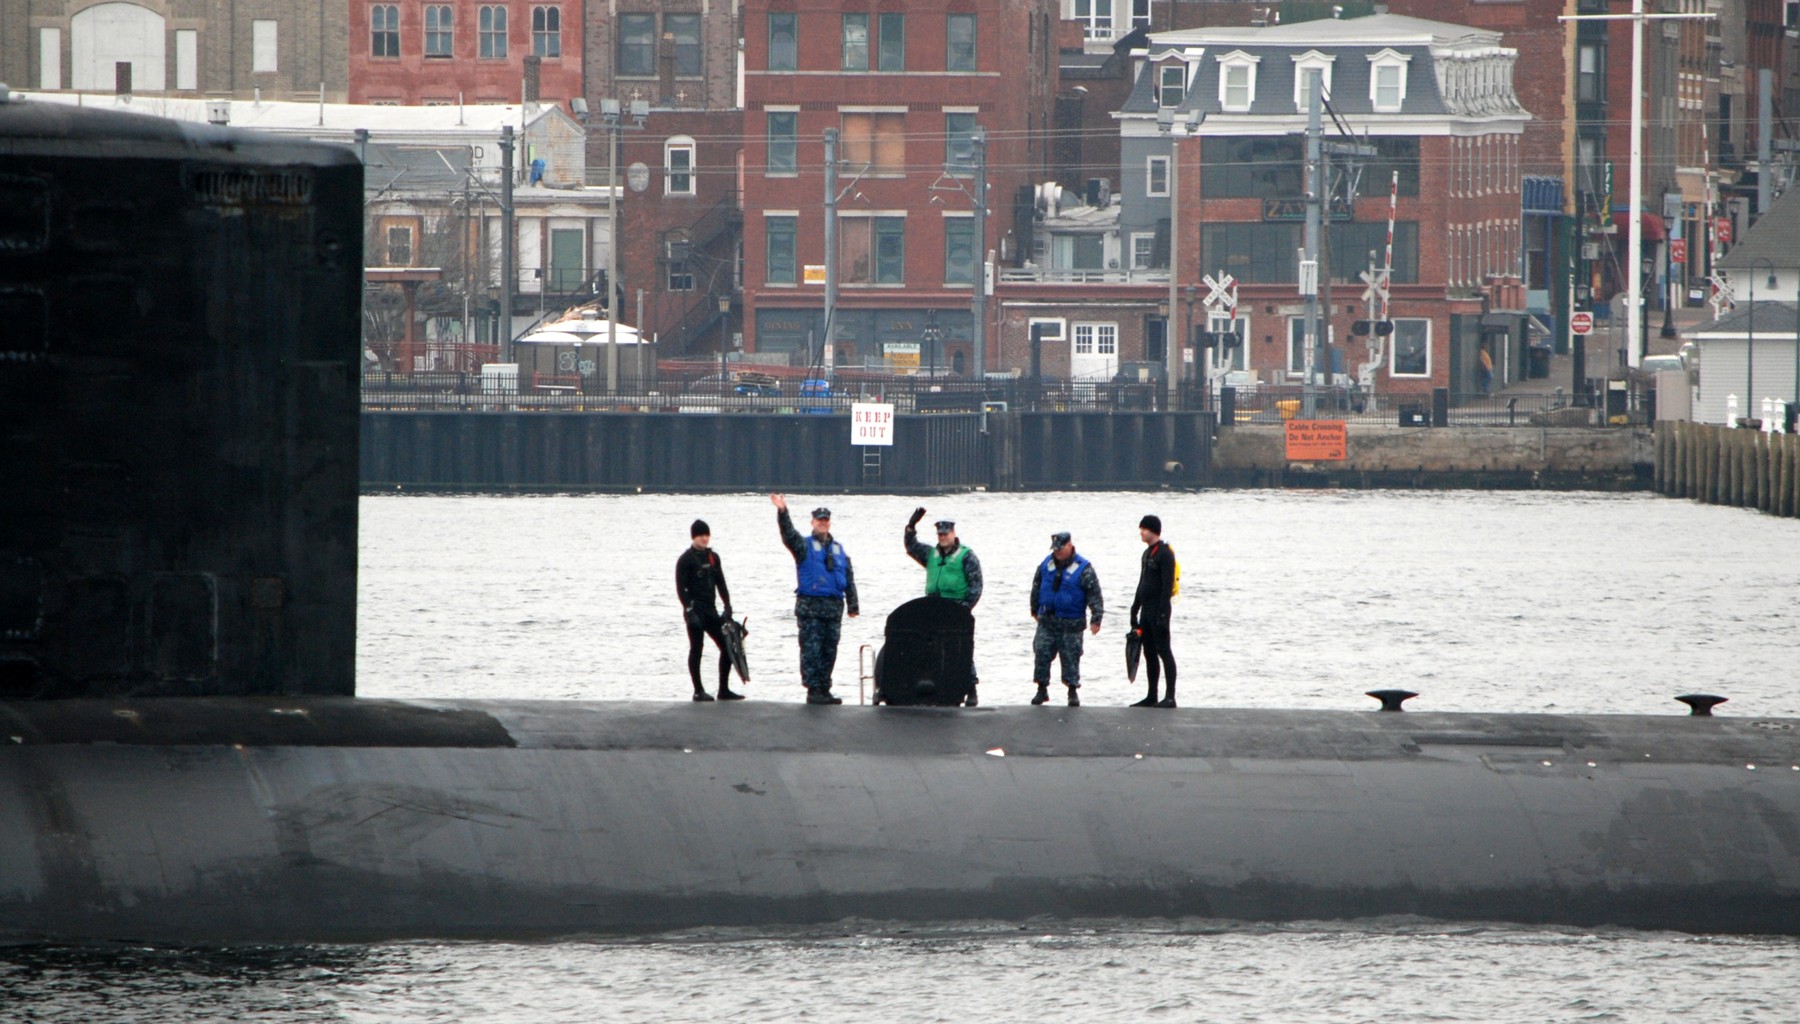 ssn-778 uss new hampshire virginia class attack submarine us navy 08